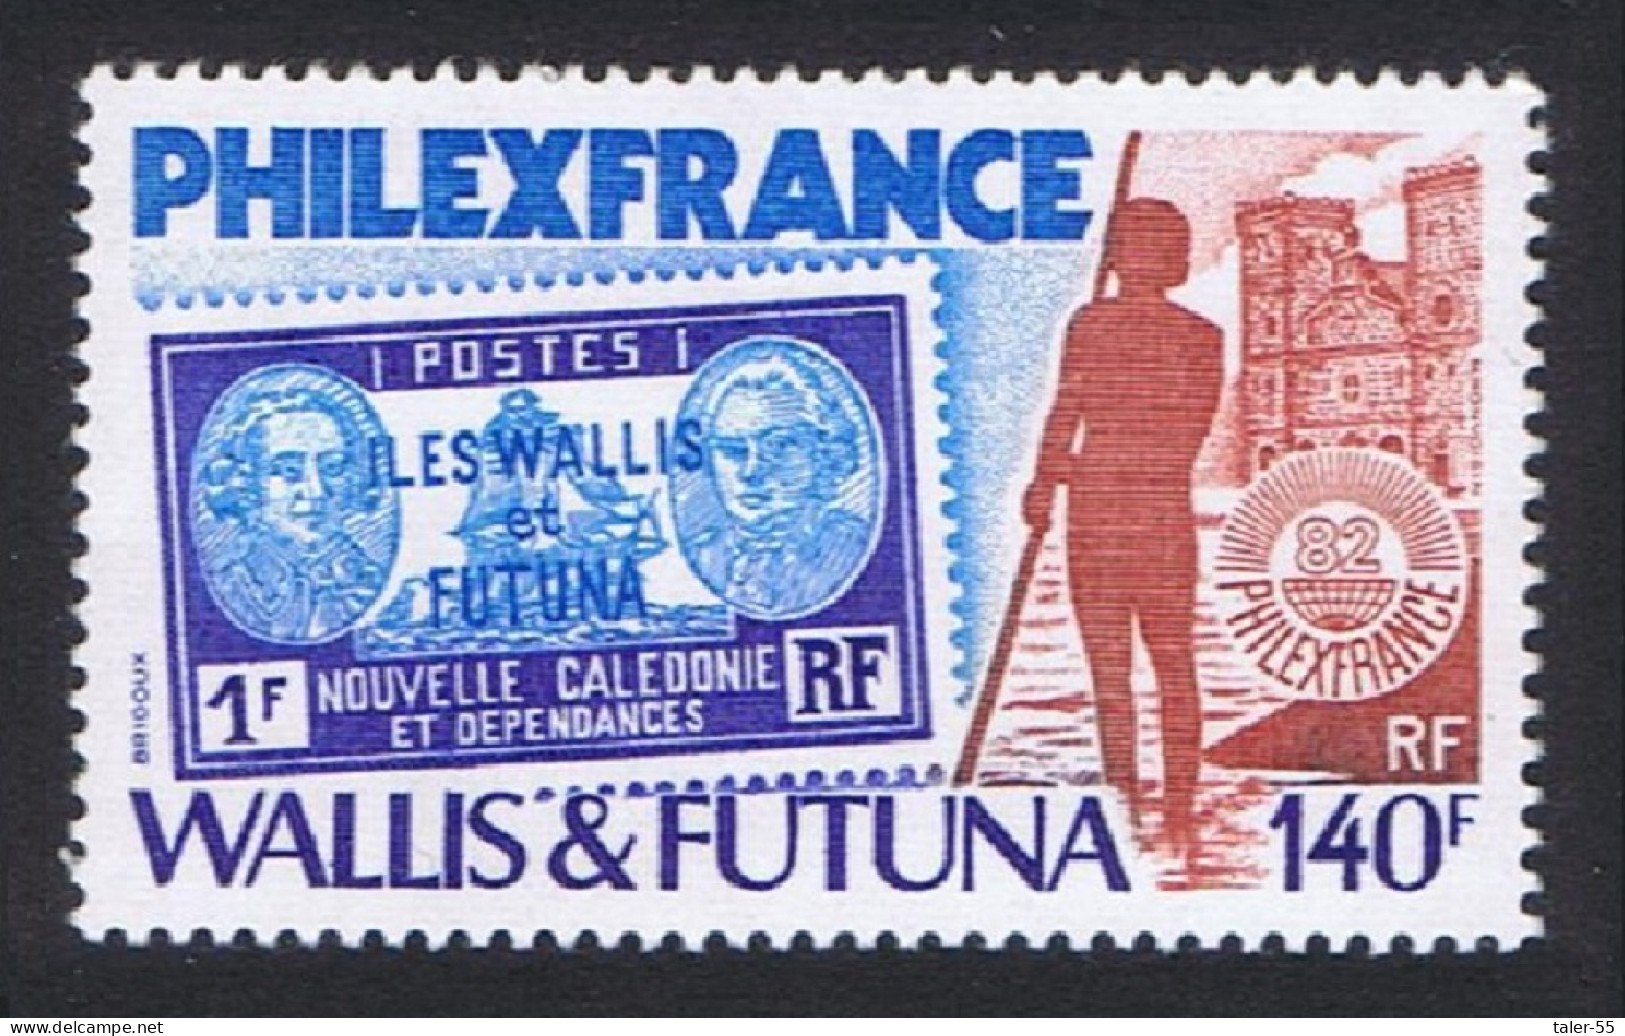 Wallis And Futuna 'Philexfrance 82' Stamp Exhibition 1982 MNH SG#395 Sc#282 - Neufs